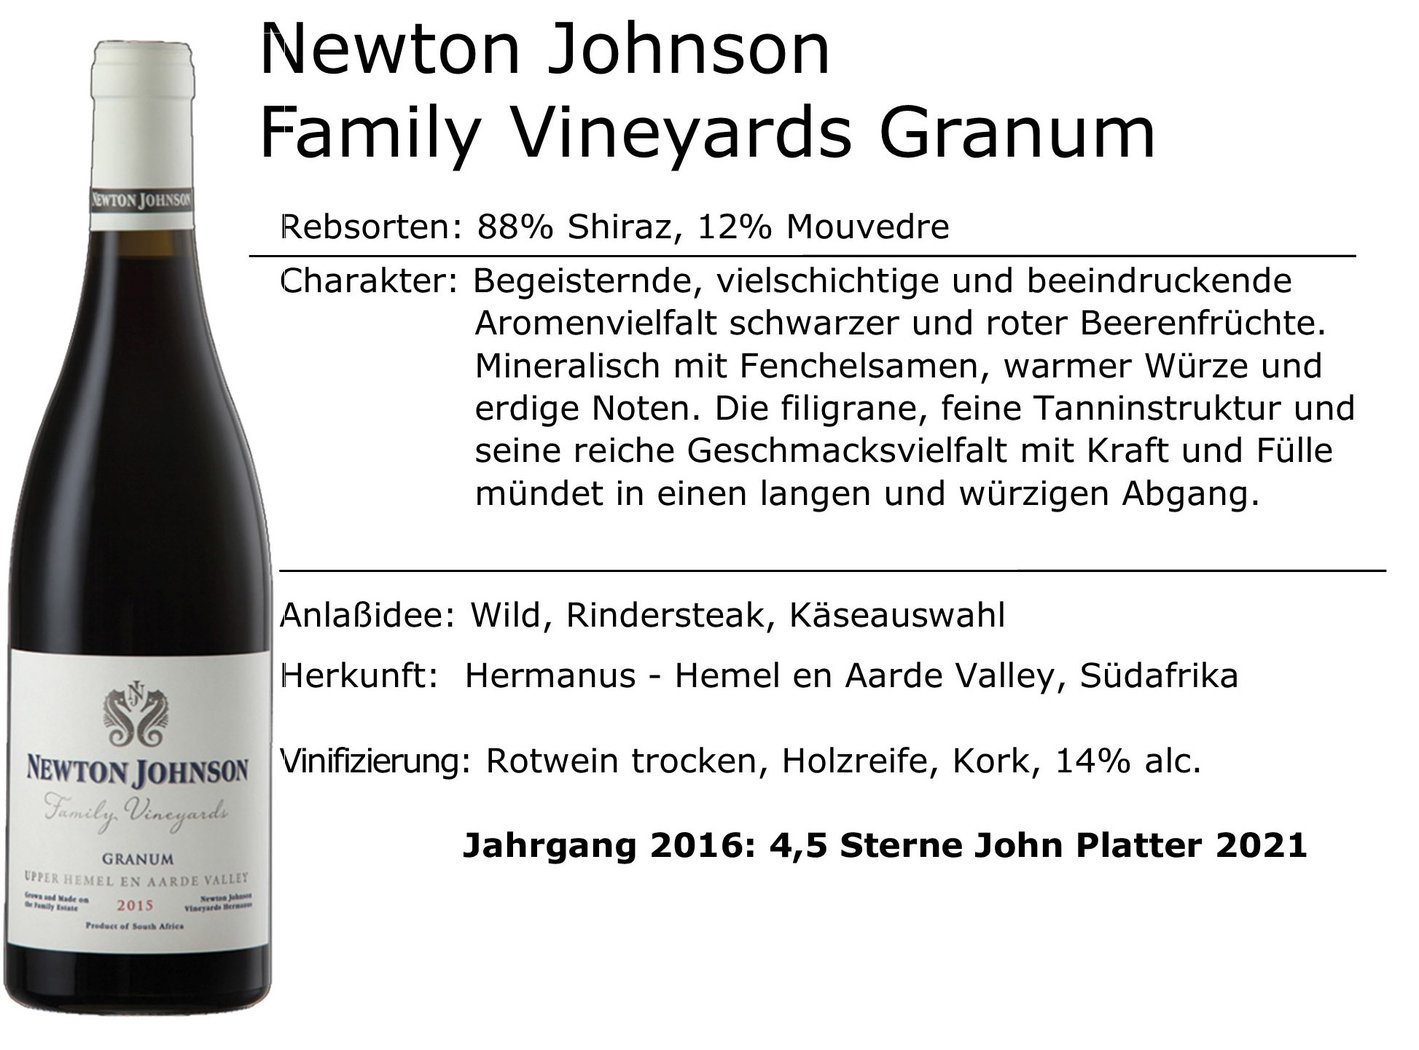 Newton Johnson Family Vineyards Granum 2016